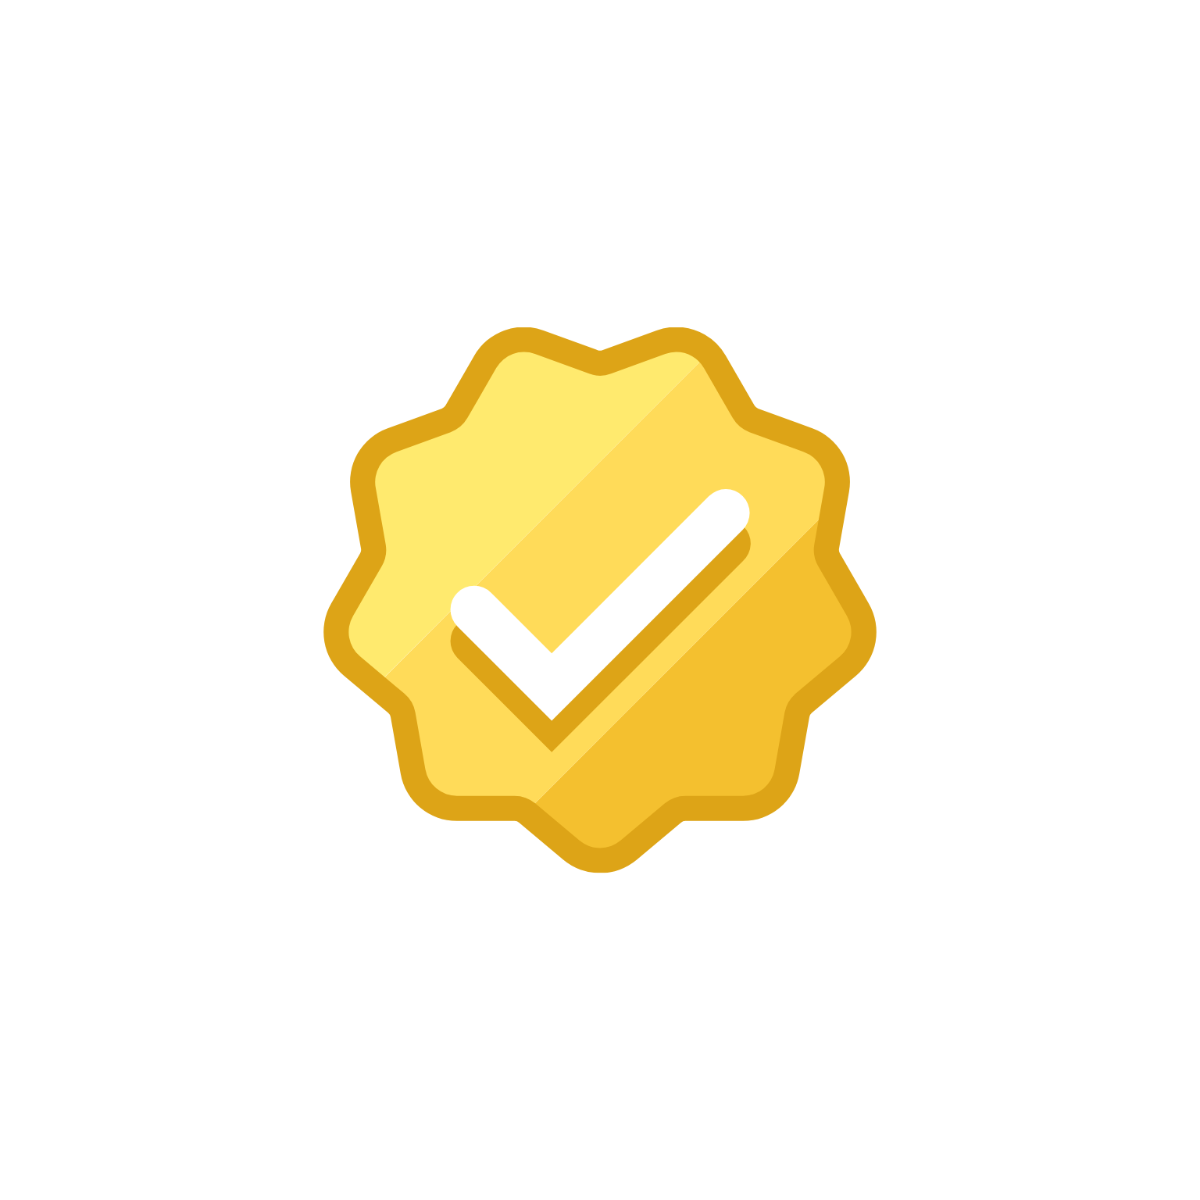 Gold Check Icon